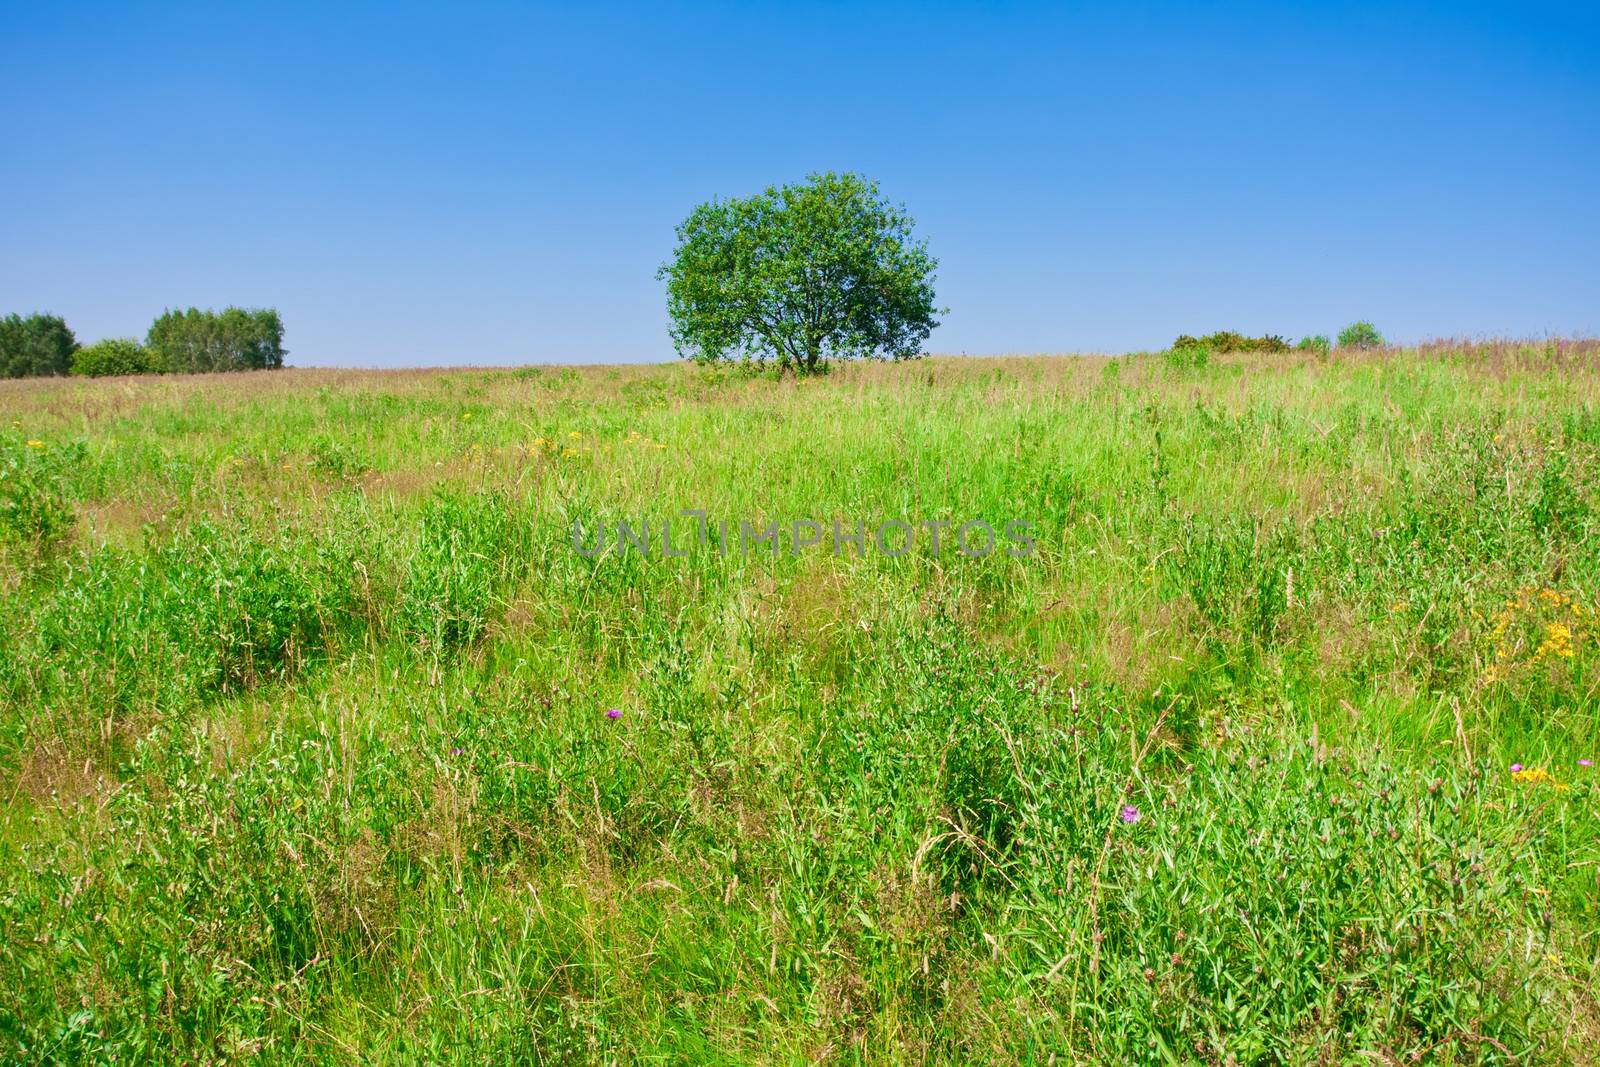 Beautiful photo of single tree in green field